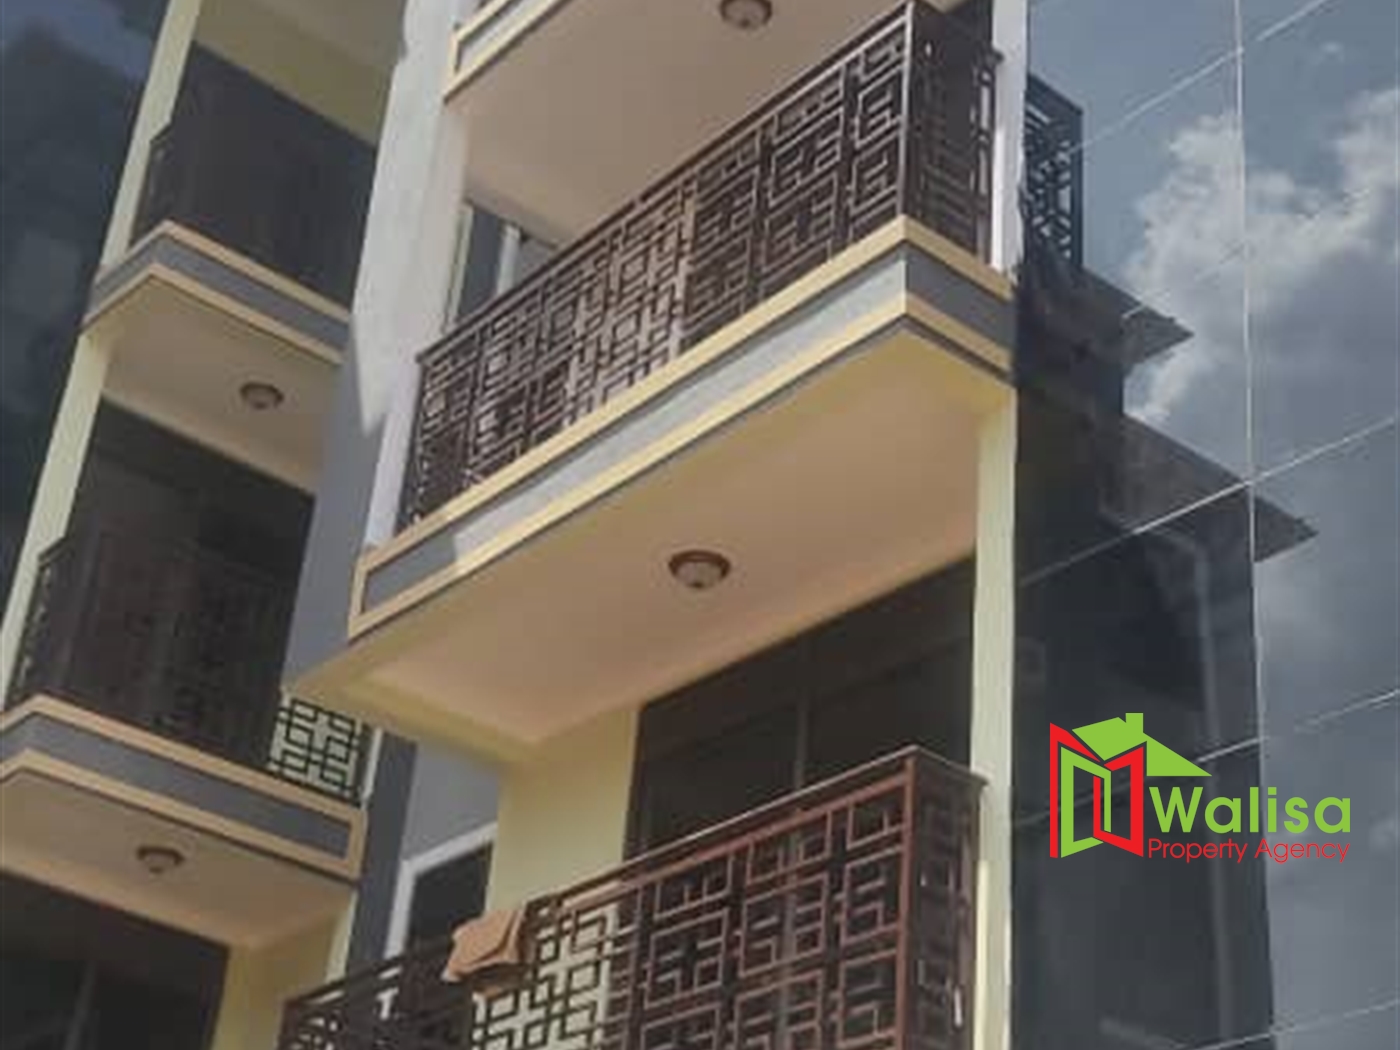 Apartment block for sale in Kiwaatule Wakiso